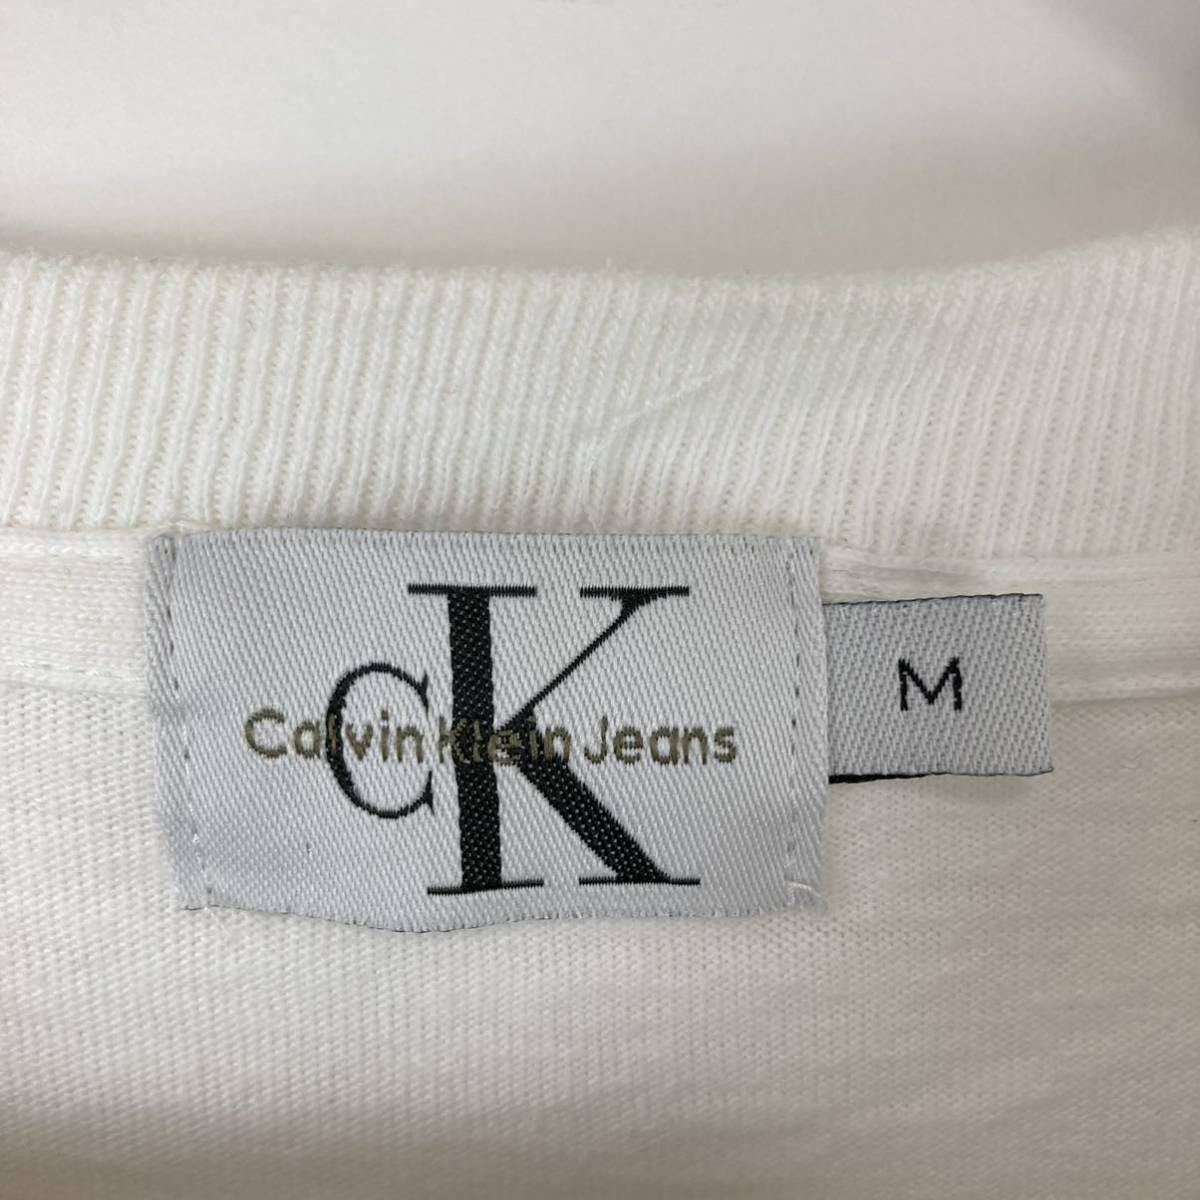 Calvin Klein カルバンクライン メンズ 半袖 Tシャツ カットソー トップス コットン ロゴ 無地 シンプル ホワイト 白色 Mサイズ カジュアル